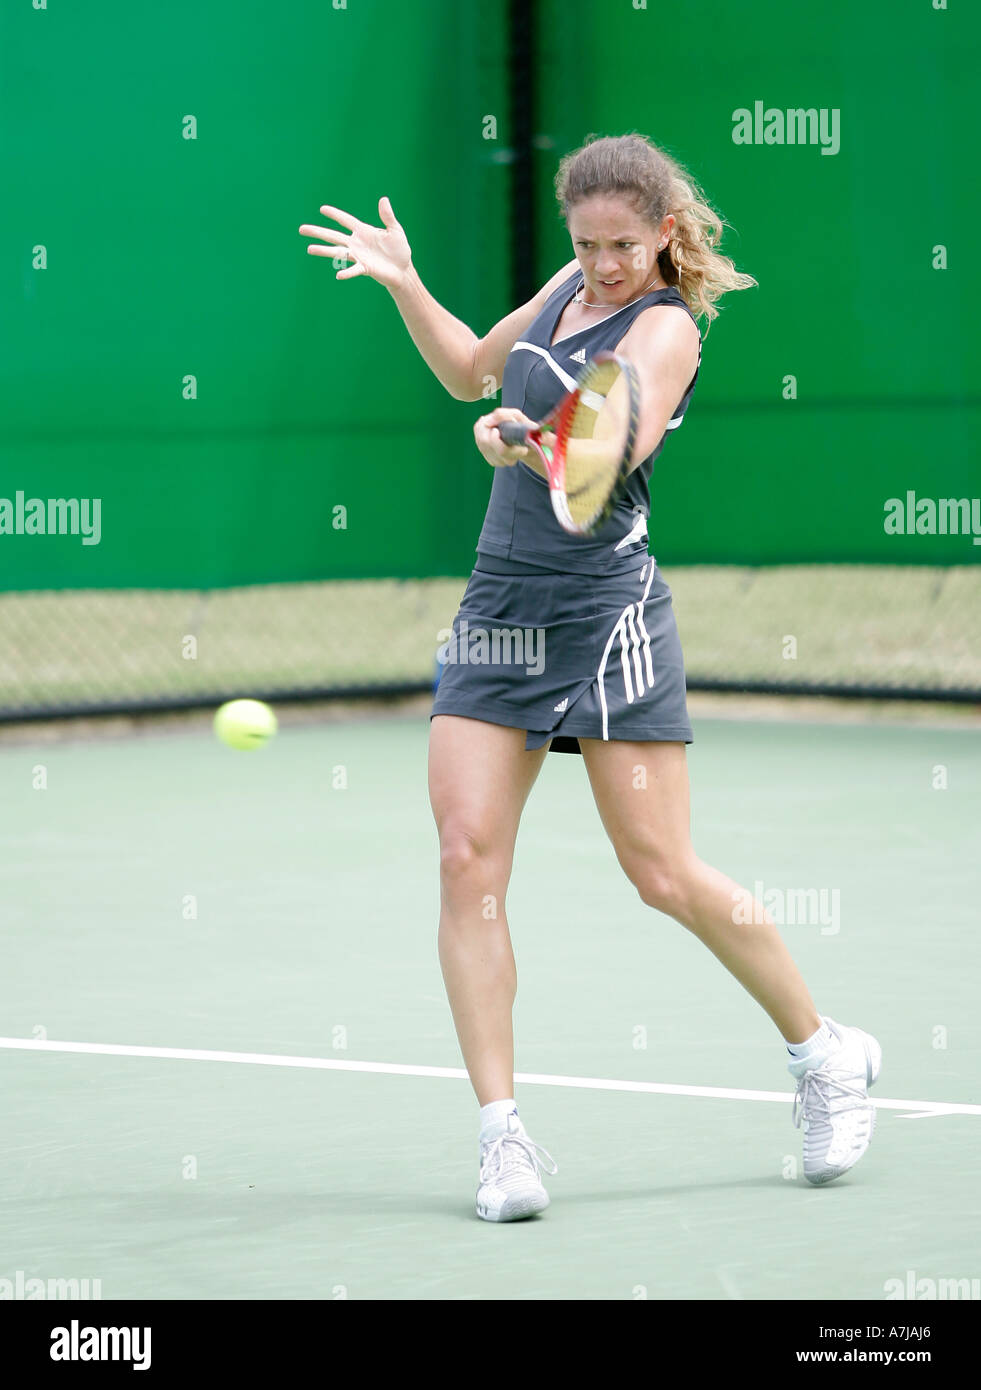 Tennis Pro Patty Schnyder from Switzerland at the Australian Open in Melbourne / Australia. Stock Photo